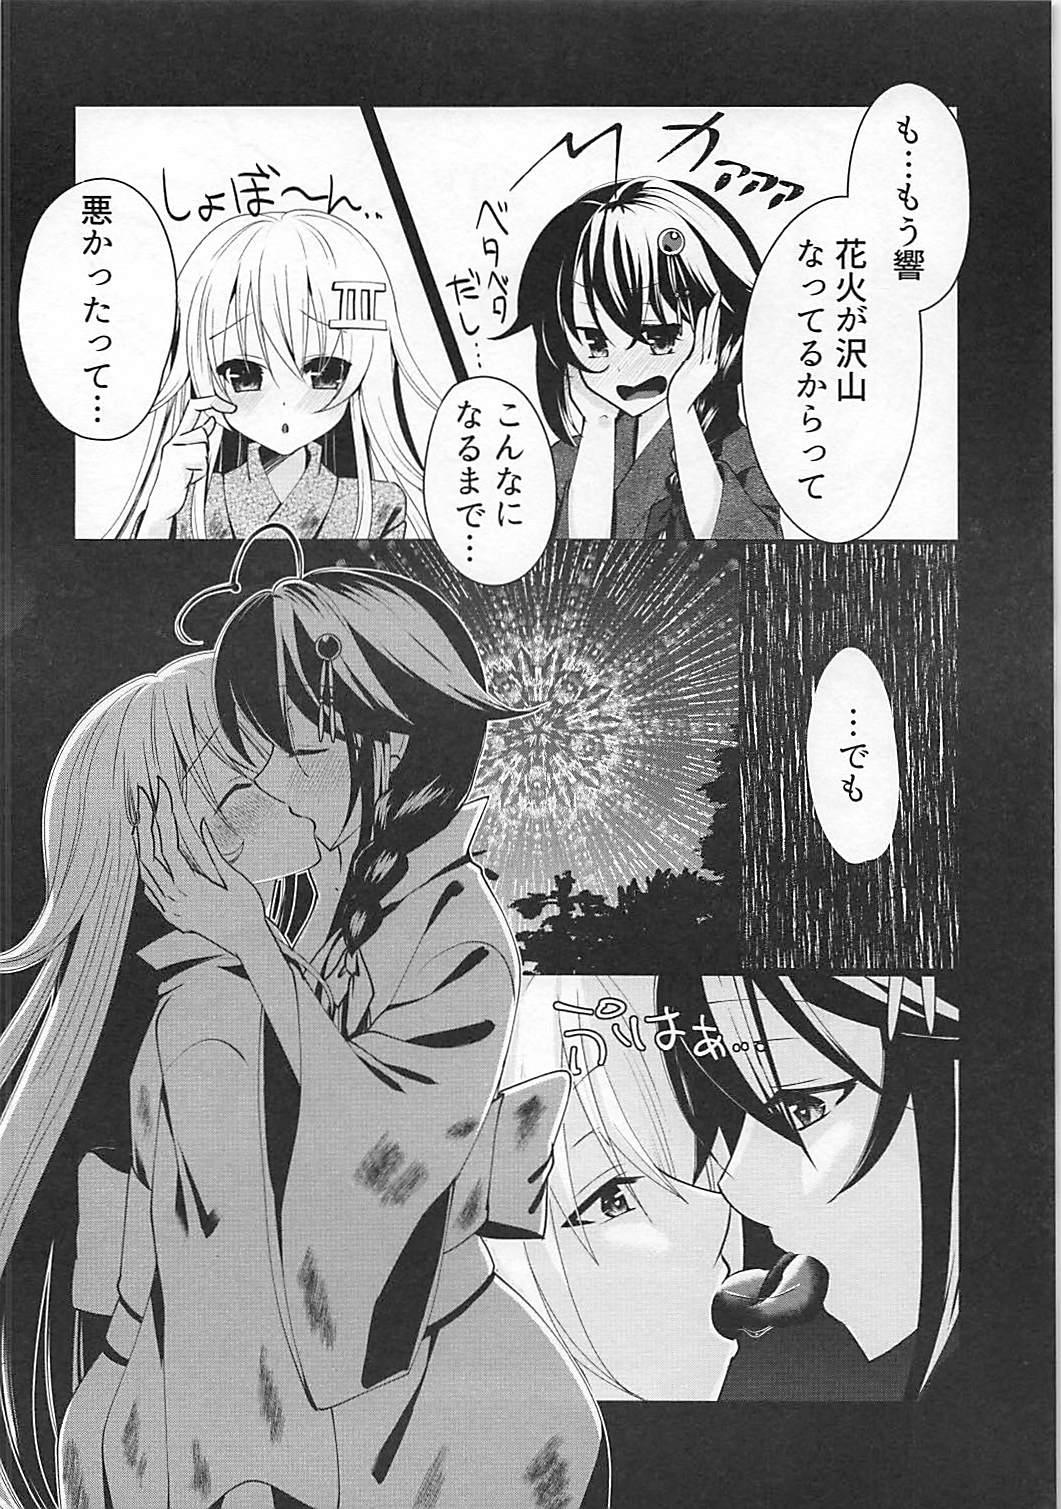 Hanabi o Miru Shigure ga Sugoku Itooshikute. - Seeing fireworks She is very lovely. 22